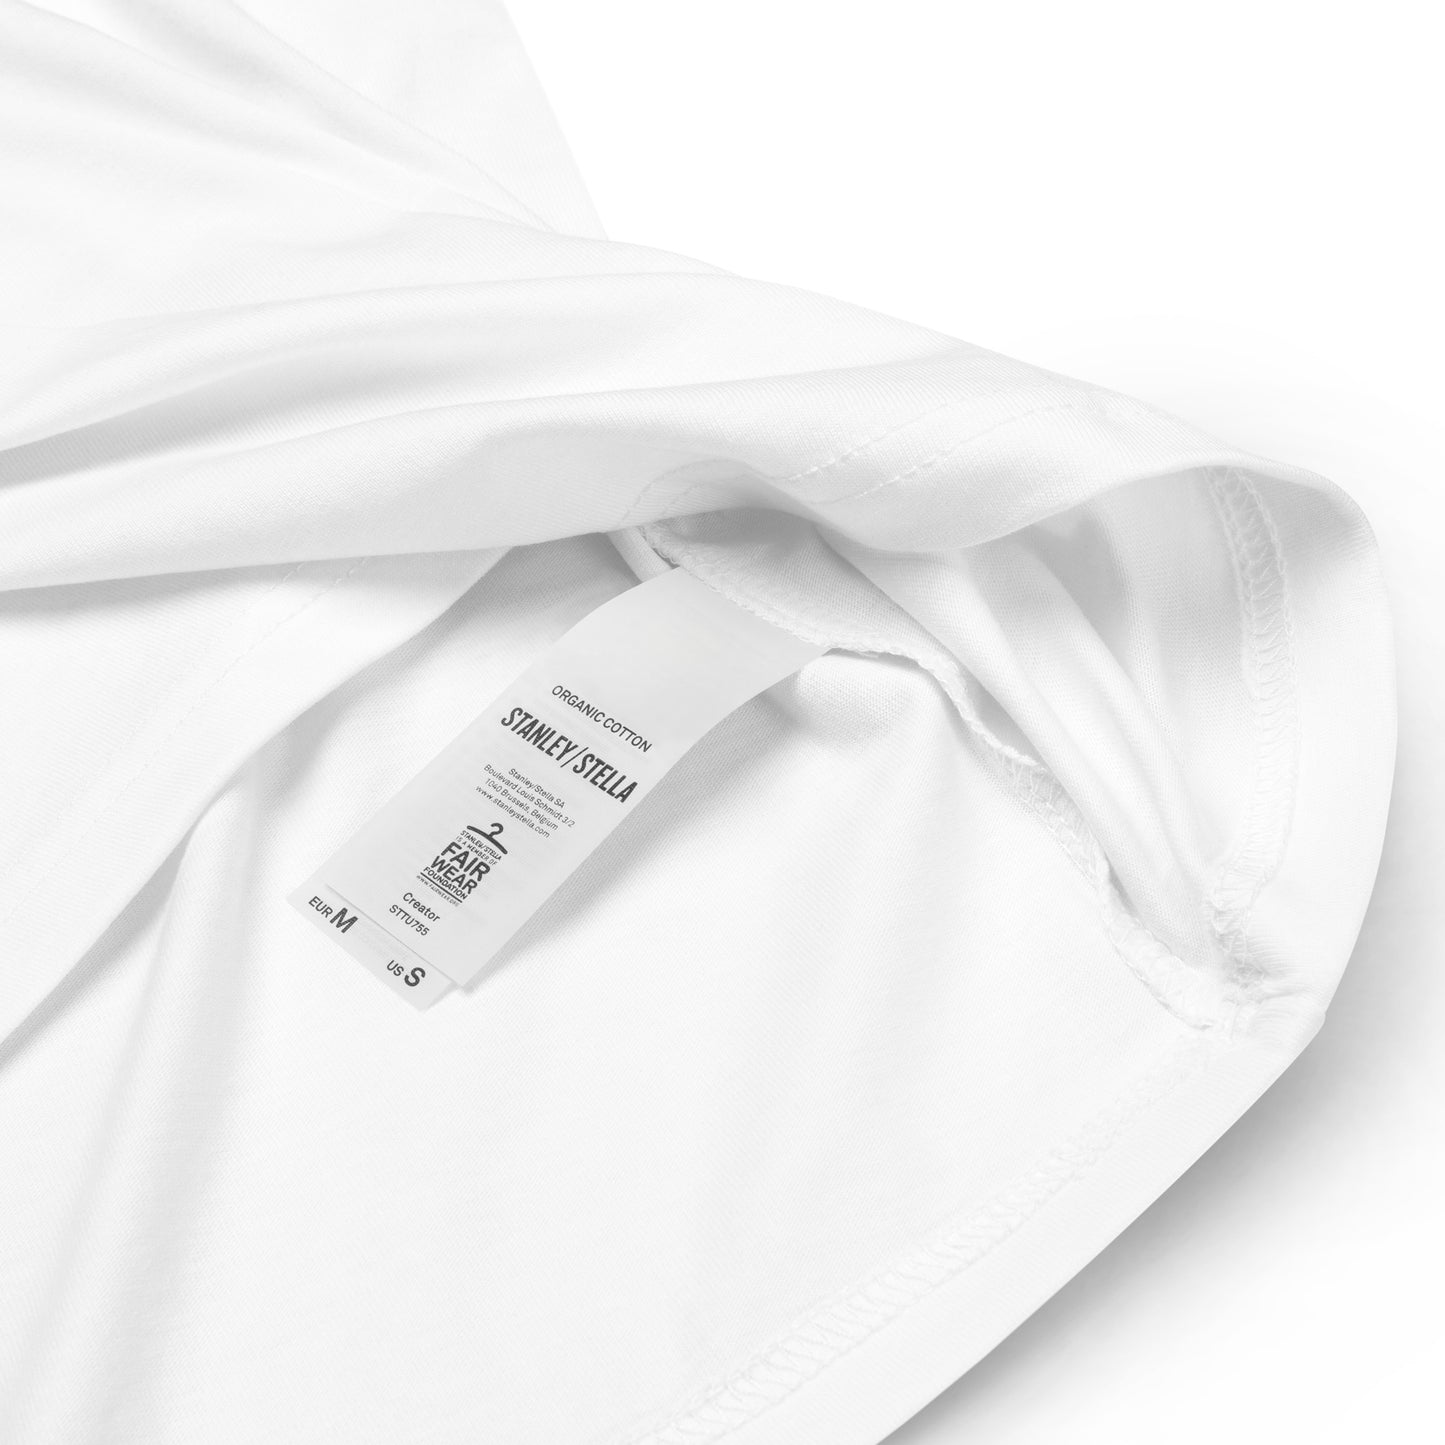 VEGAN " Animal Guardian" Unisex organic cotton t-shirt